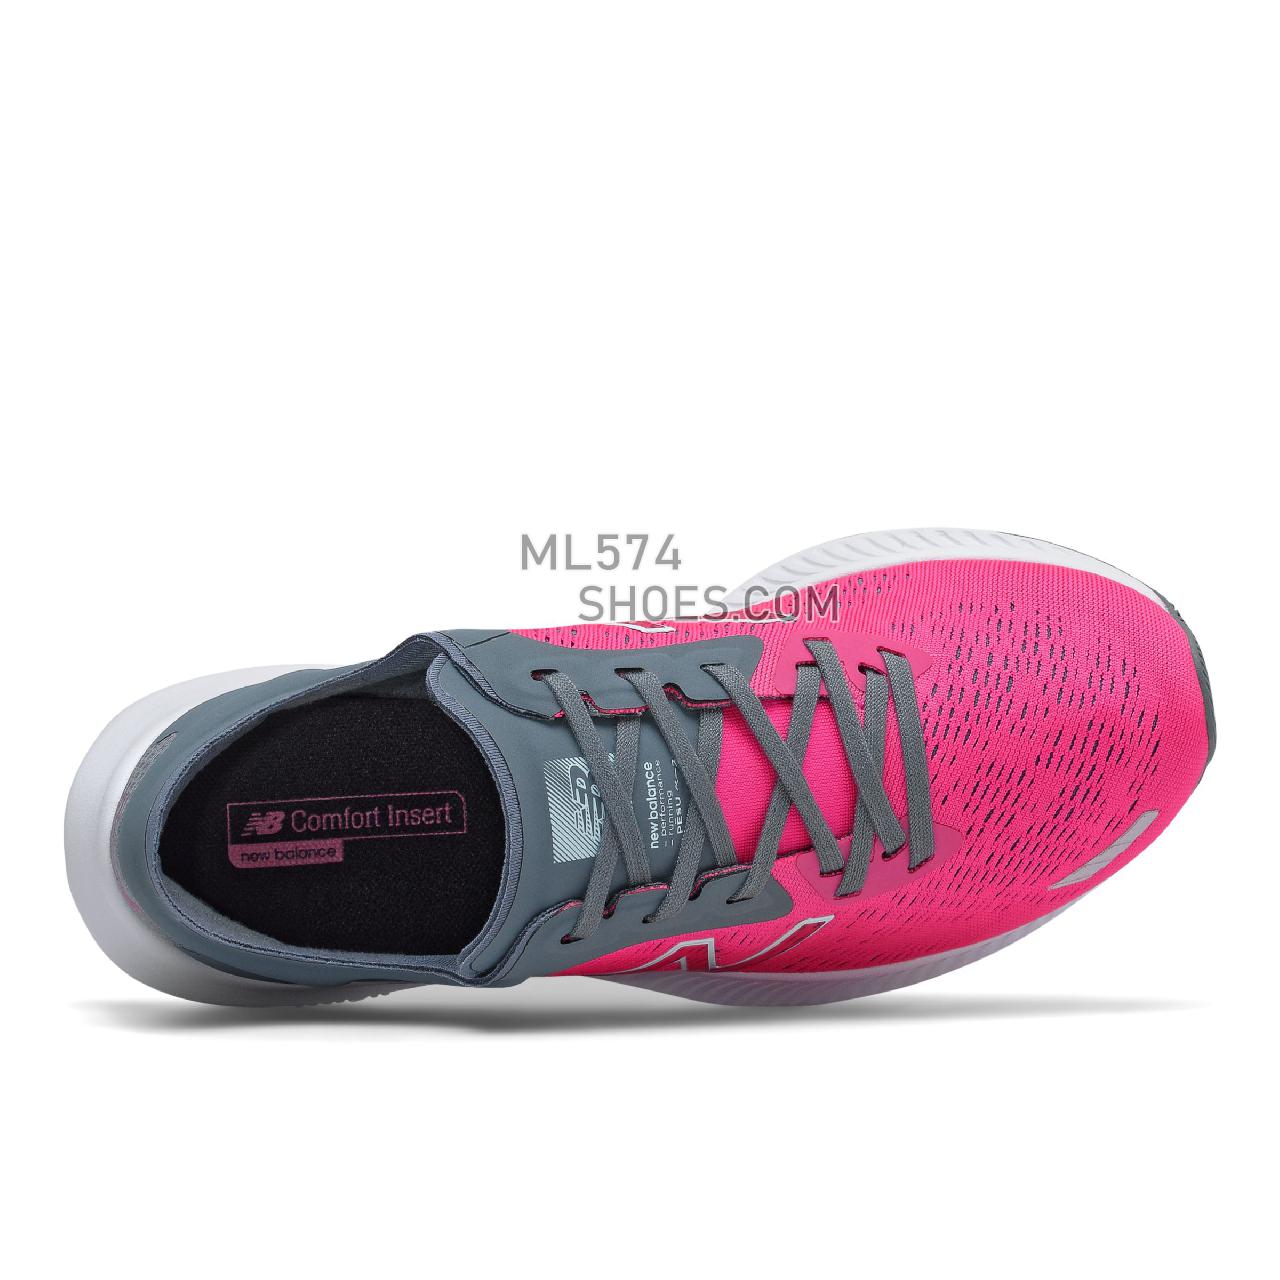 New Balance DynaSoft PESU - Women's Classic Sneakers - Pink Glo with Ocean Grey - WPESURP1